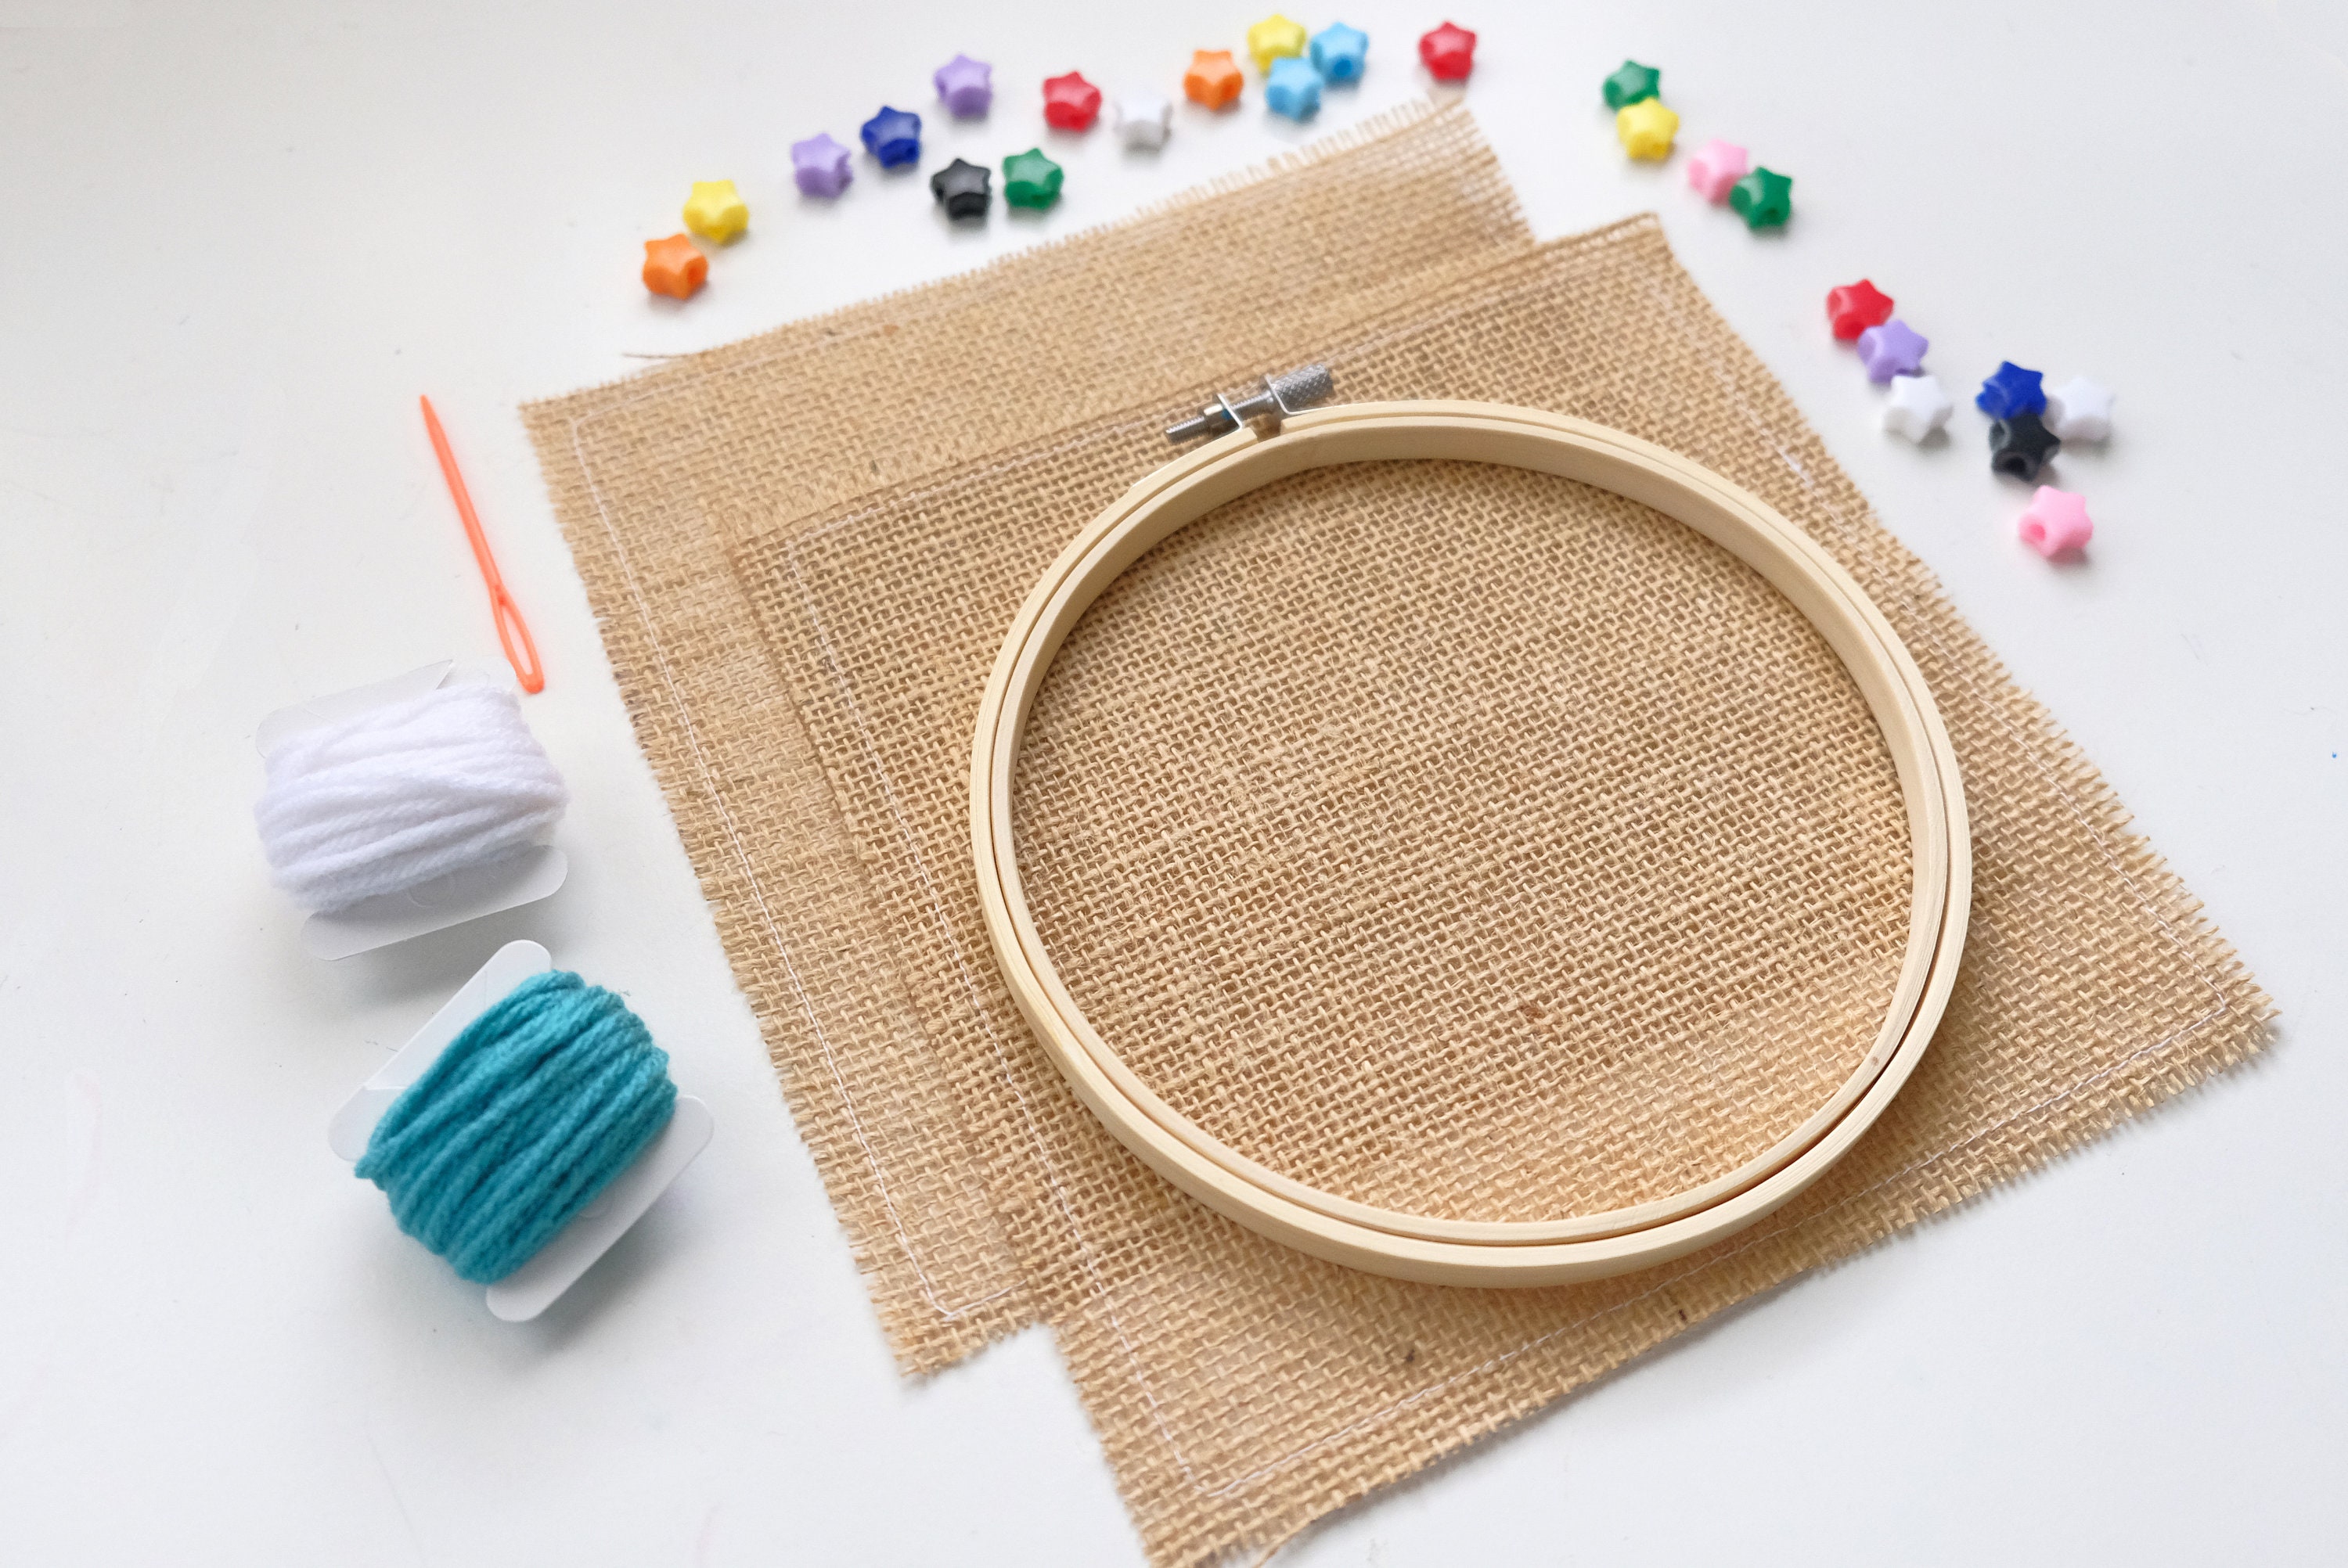 Learn To Sew Kit - Hub Hobby